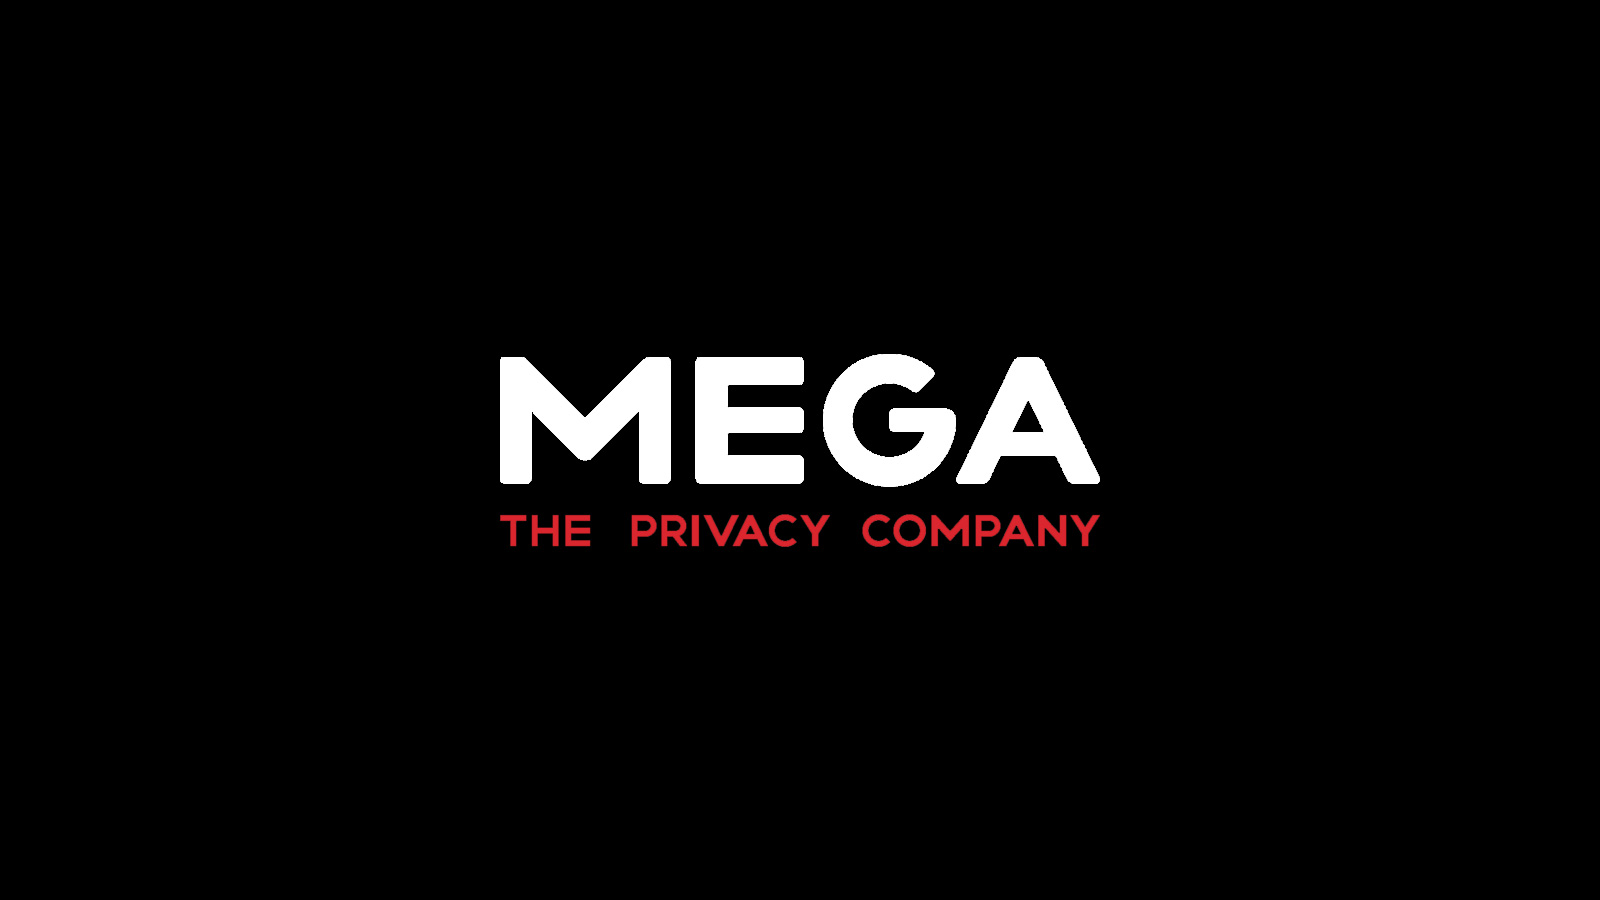 MEGA logo on a black background